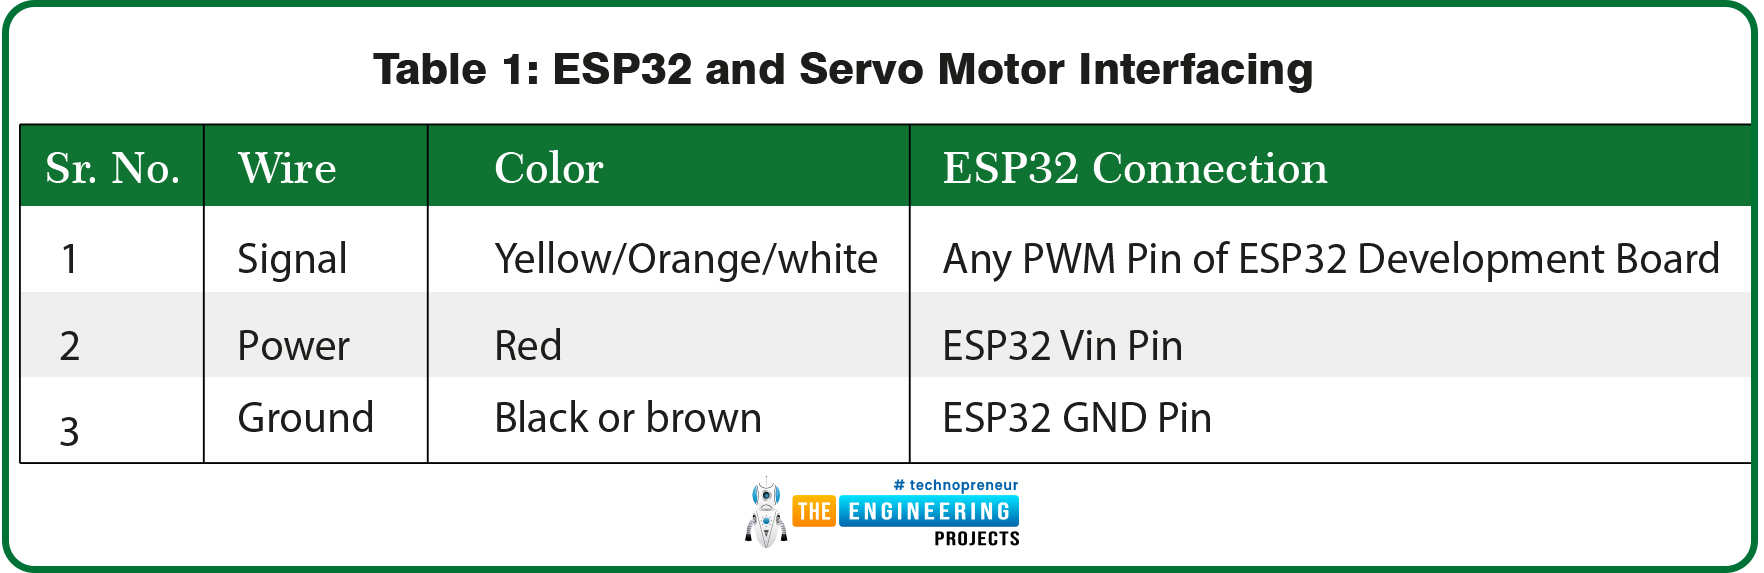 ESP32 and Servo Motor Interfacing, esp32 servo motor, servo motor esp32, control servo with esp32, esp32 servo control, servo motor esp32, esp32 servo, servo esp32